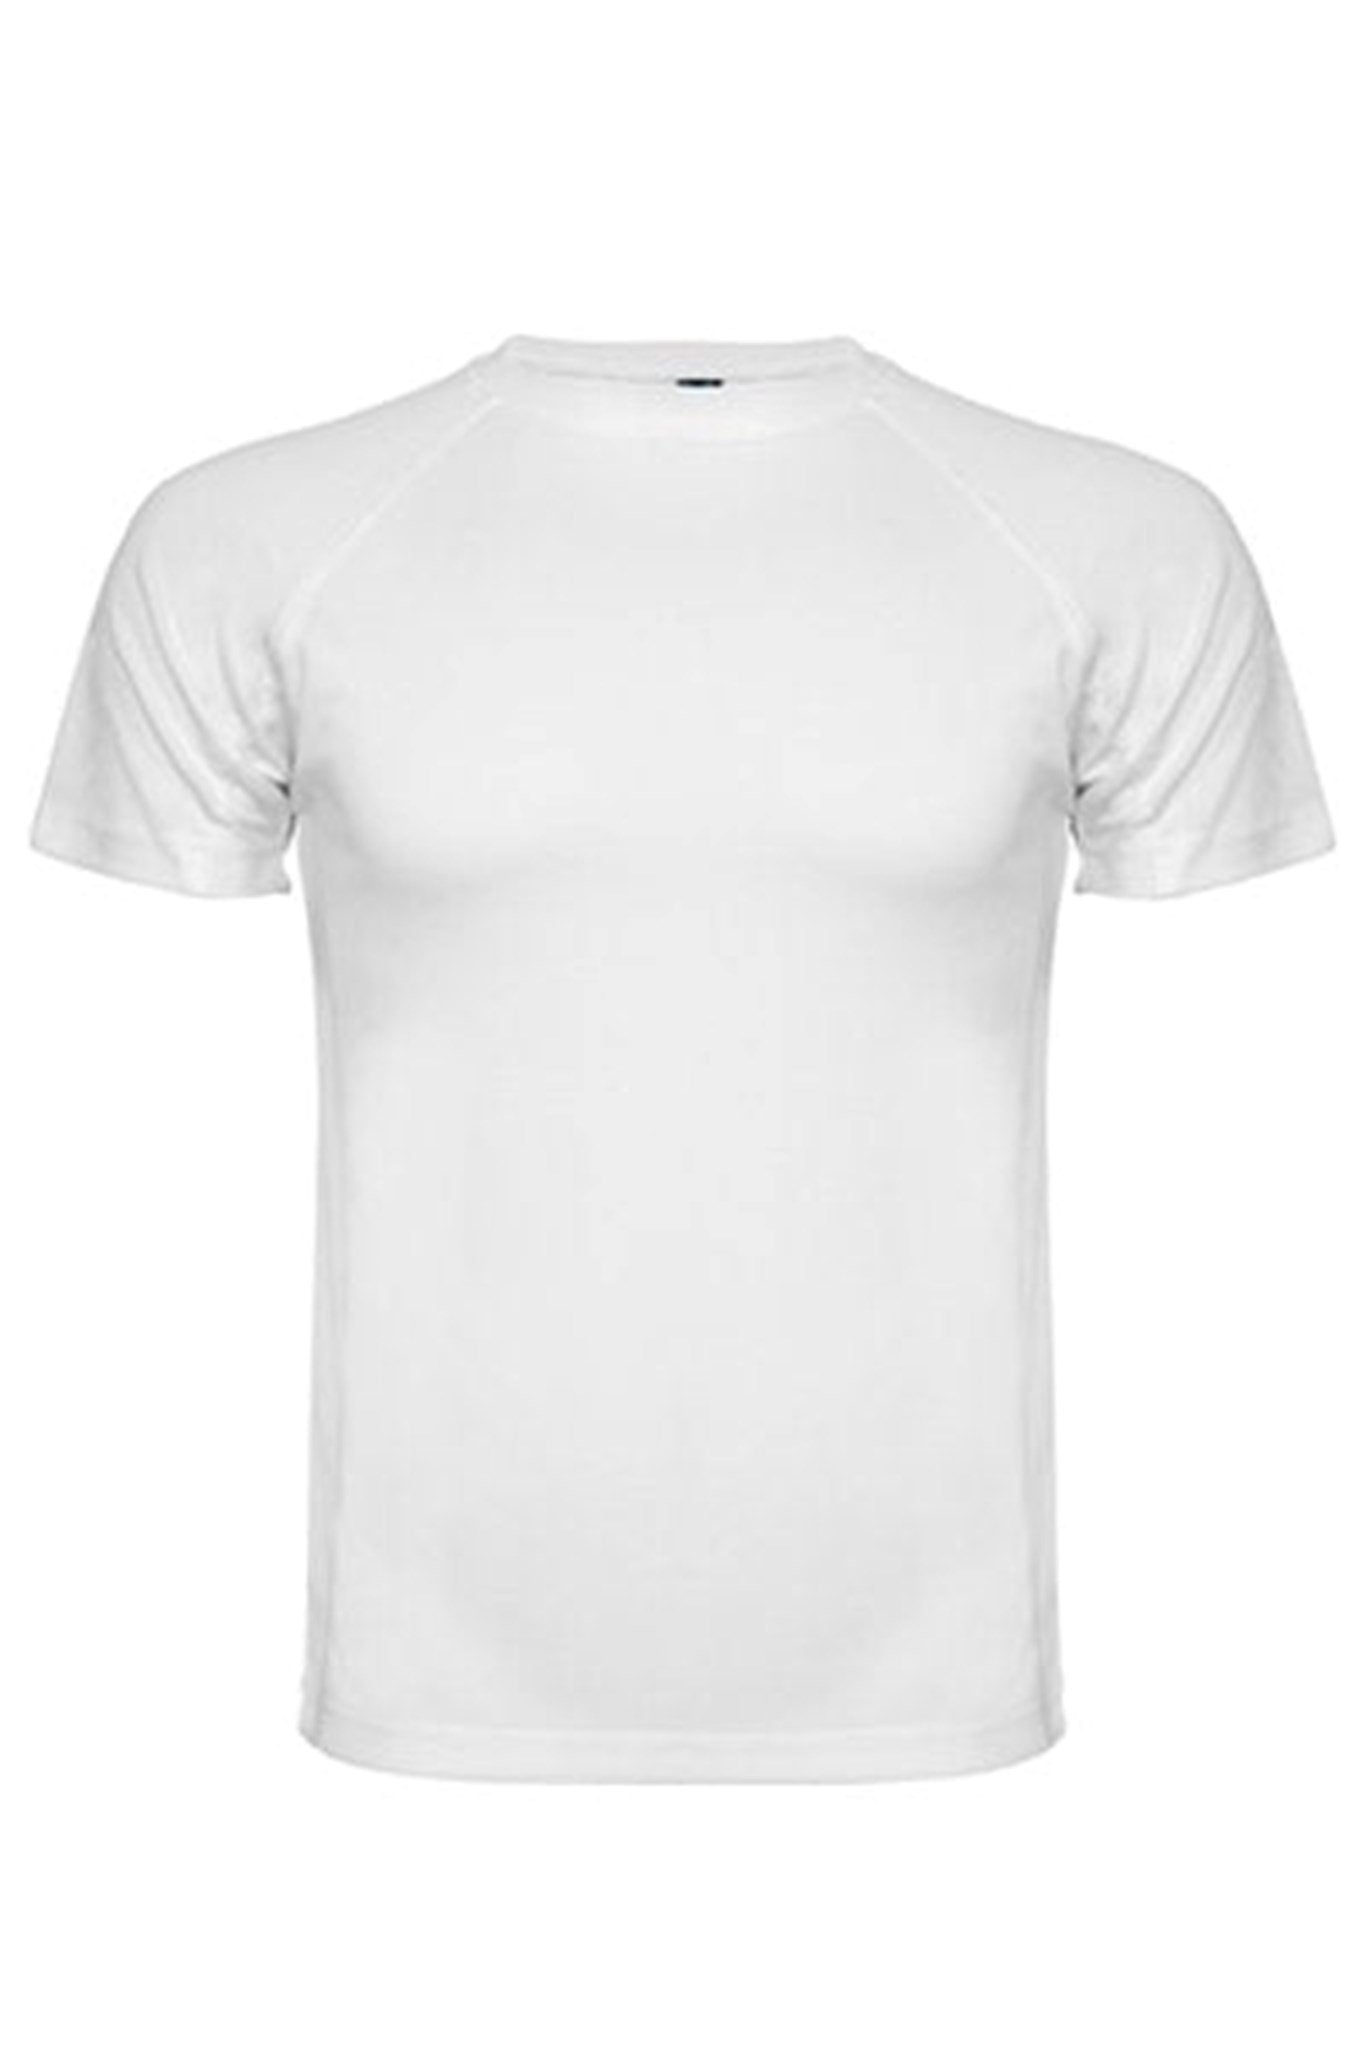 Trænings T-shirt - Hvid